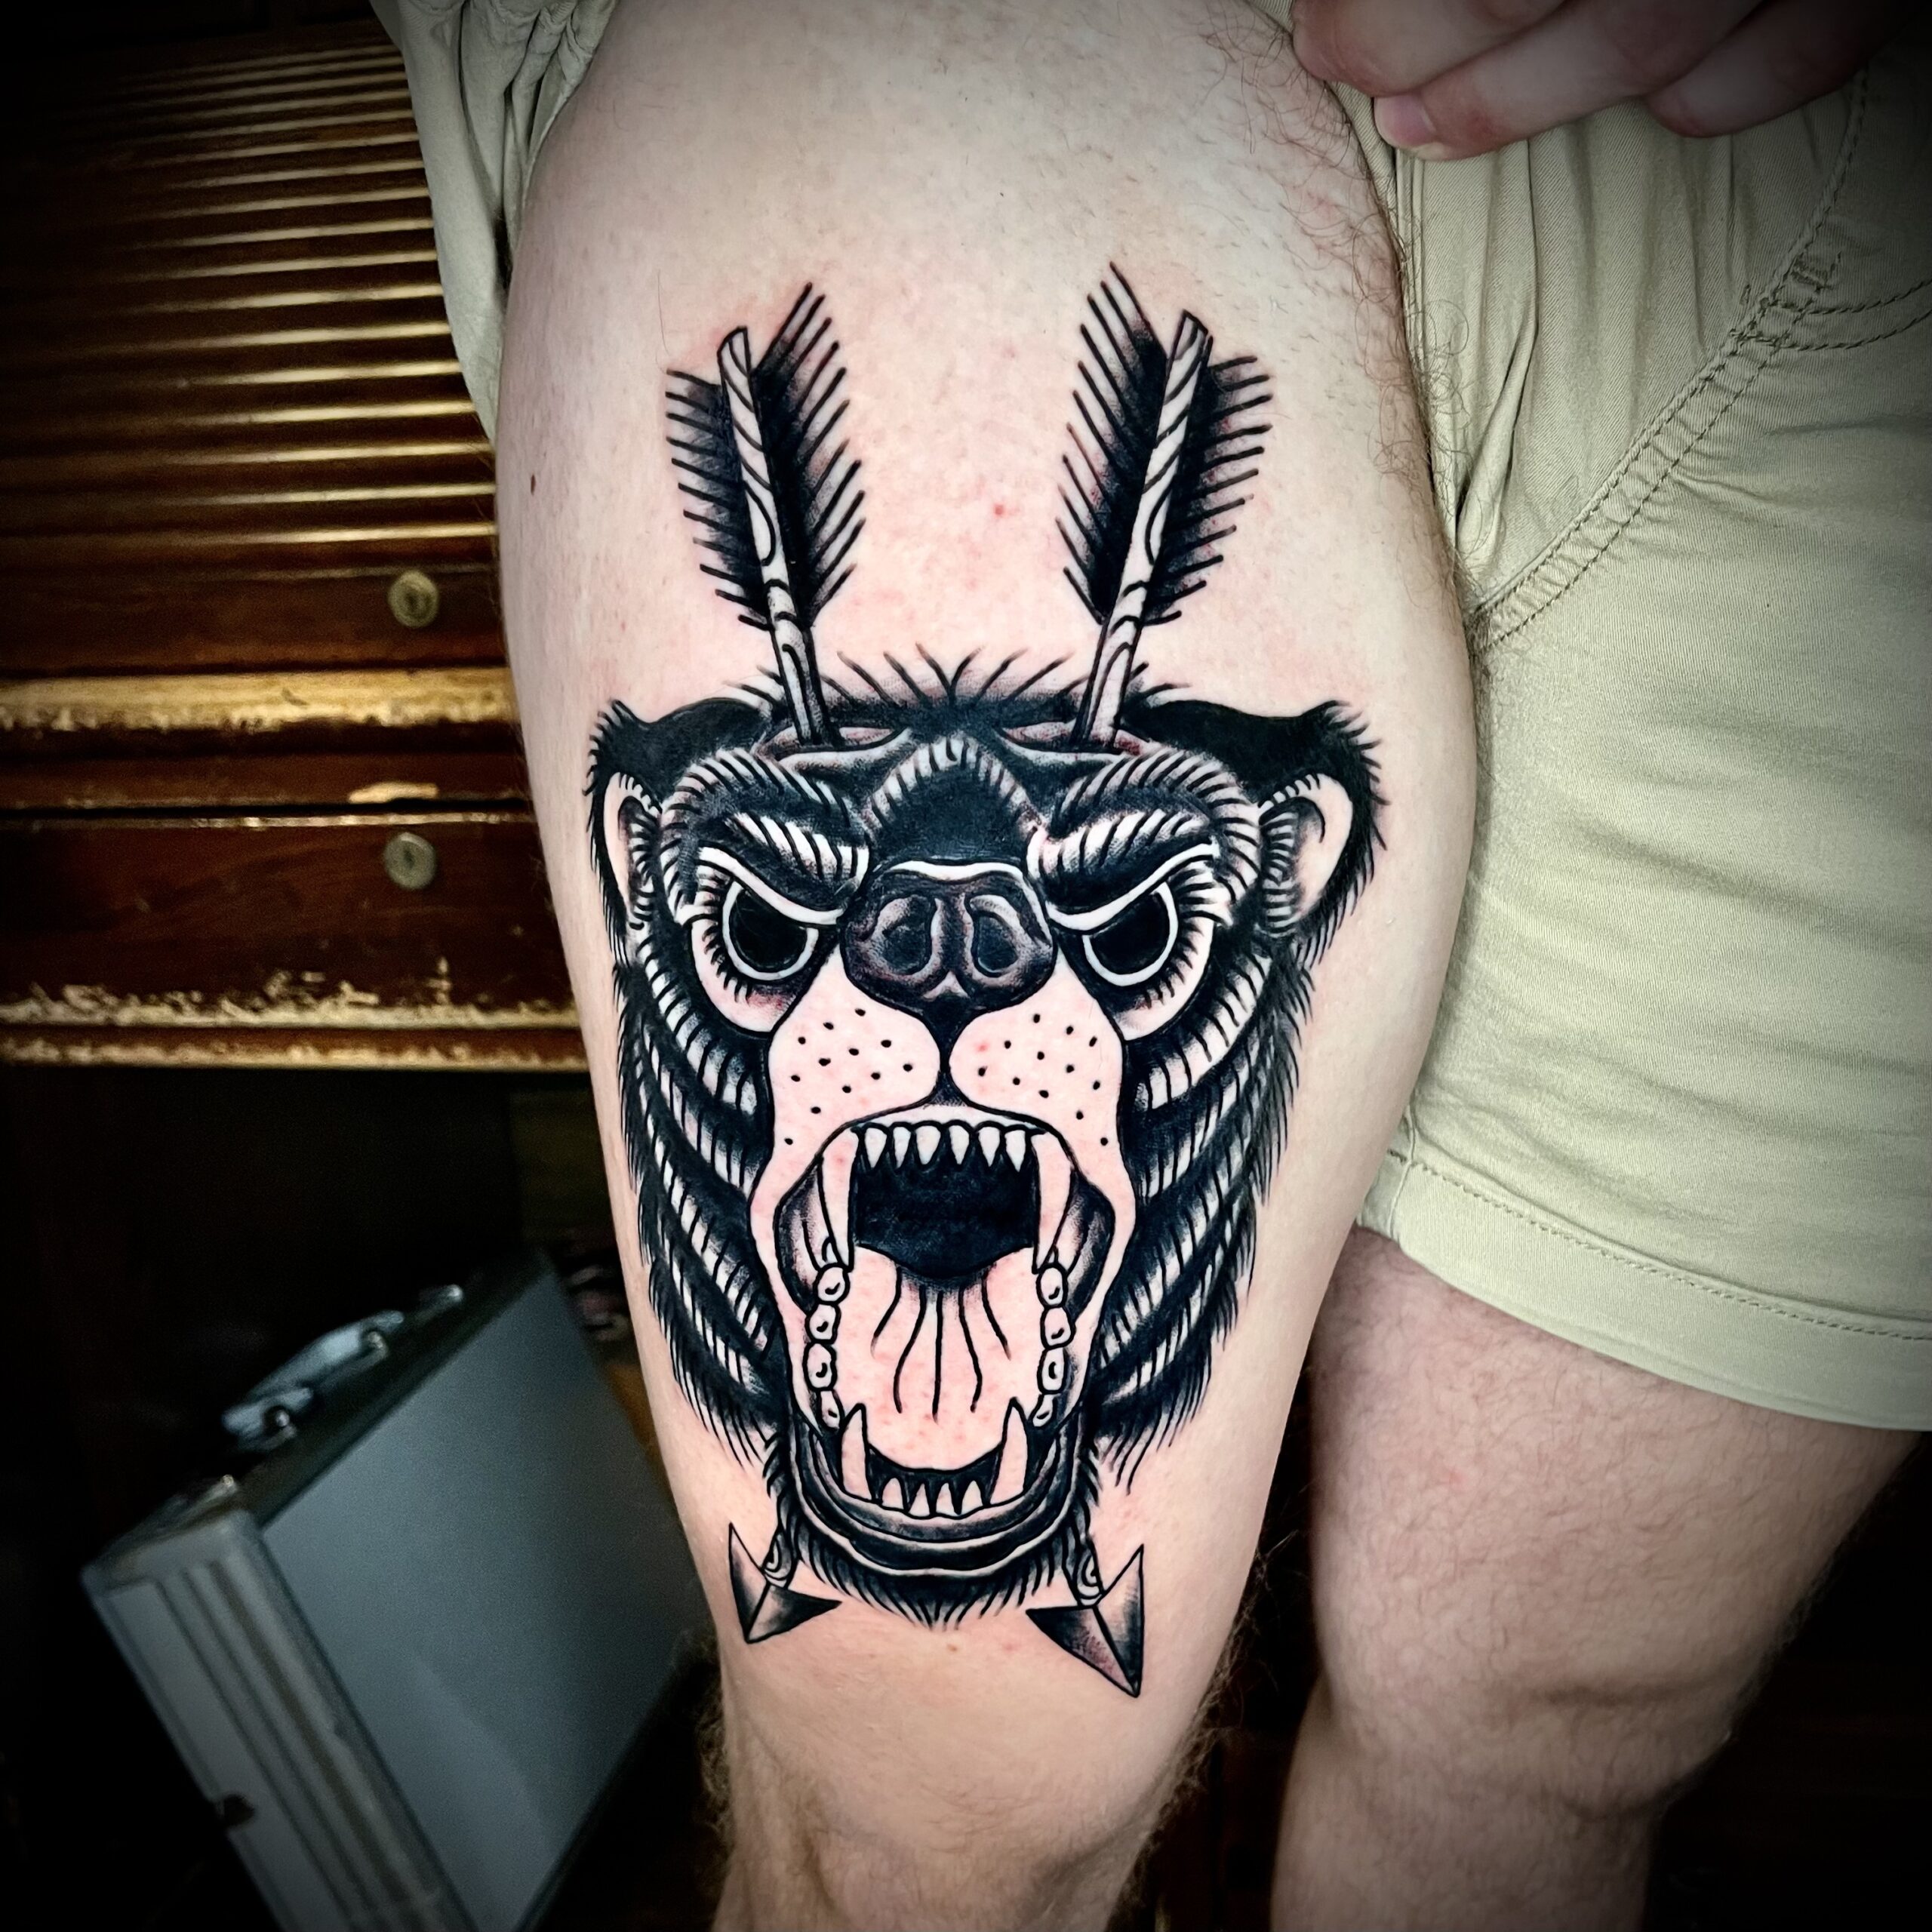 Tattoo of a bear on a man's leg